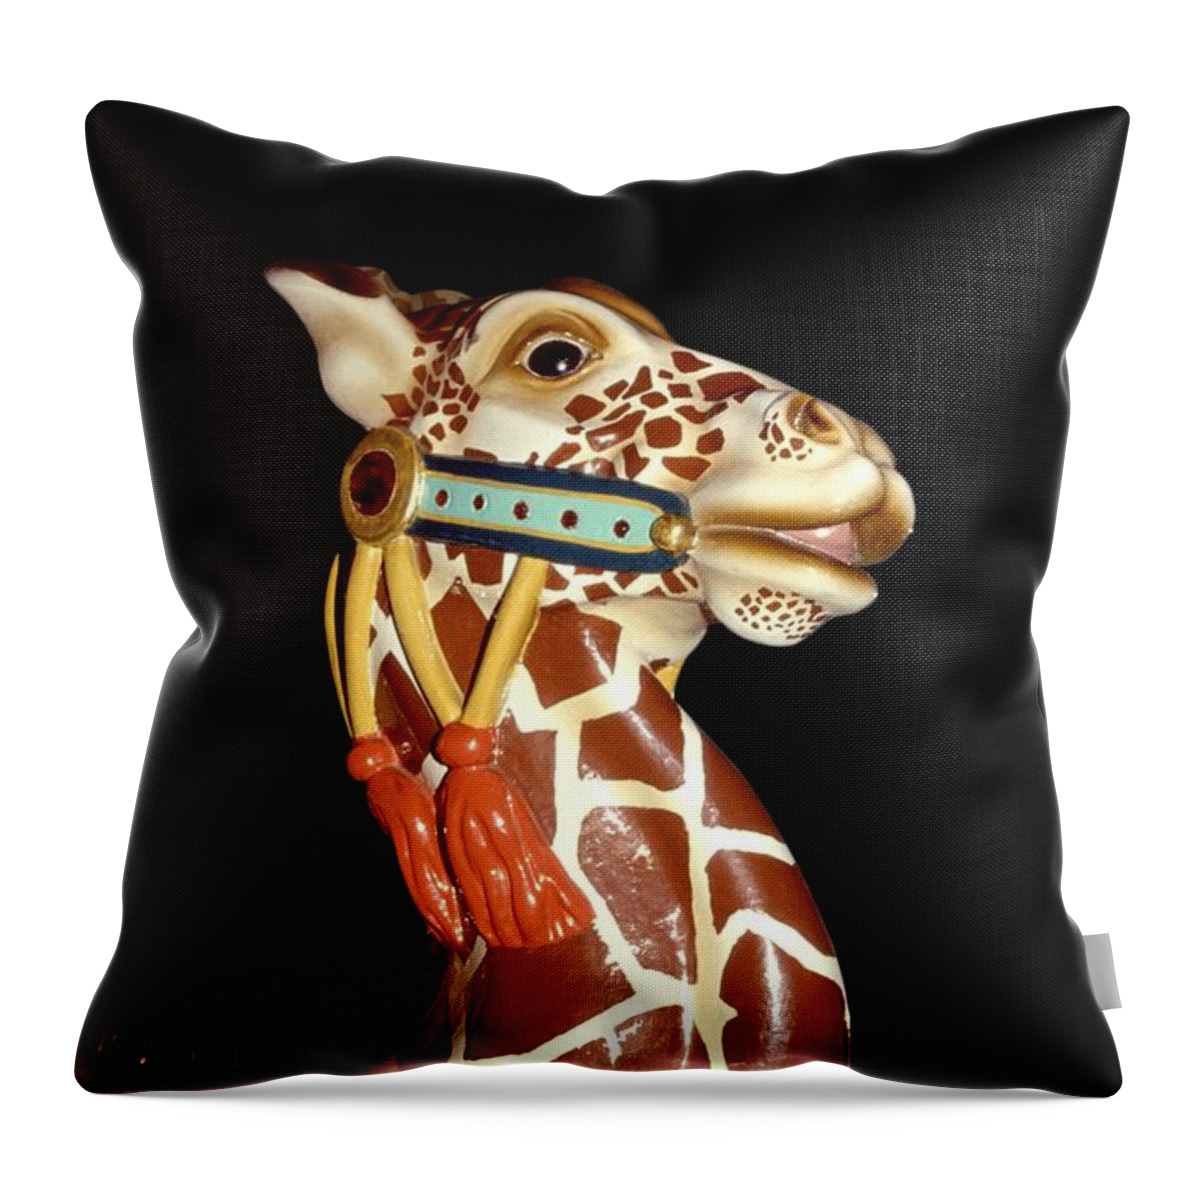 Carousel Throw Pillow featuring the photograph carousel animals prints - Carousel Giraffe by Sharon Hudson